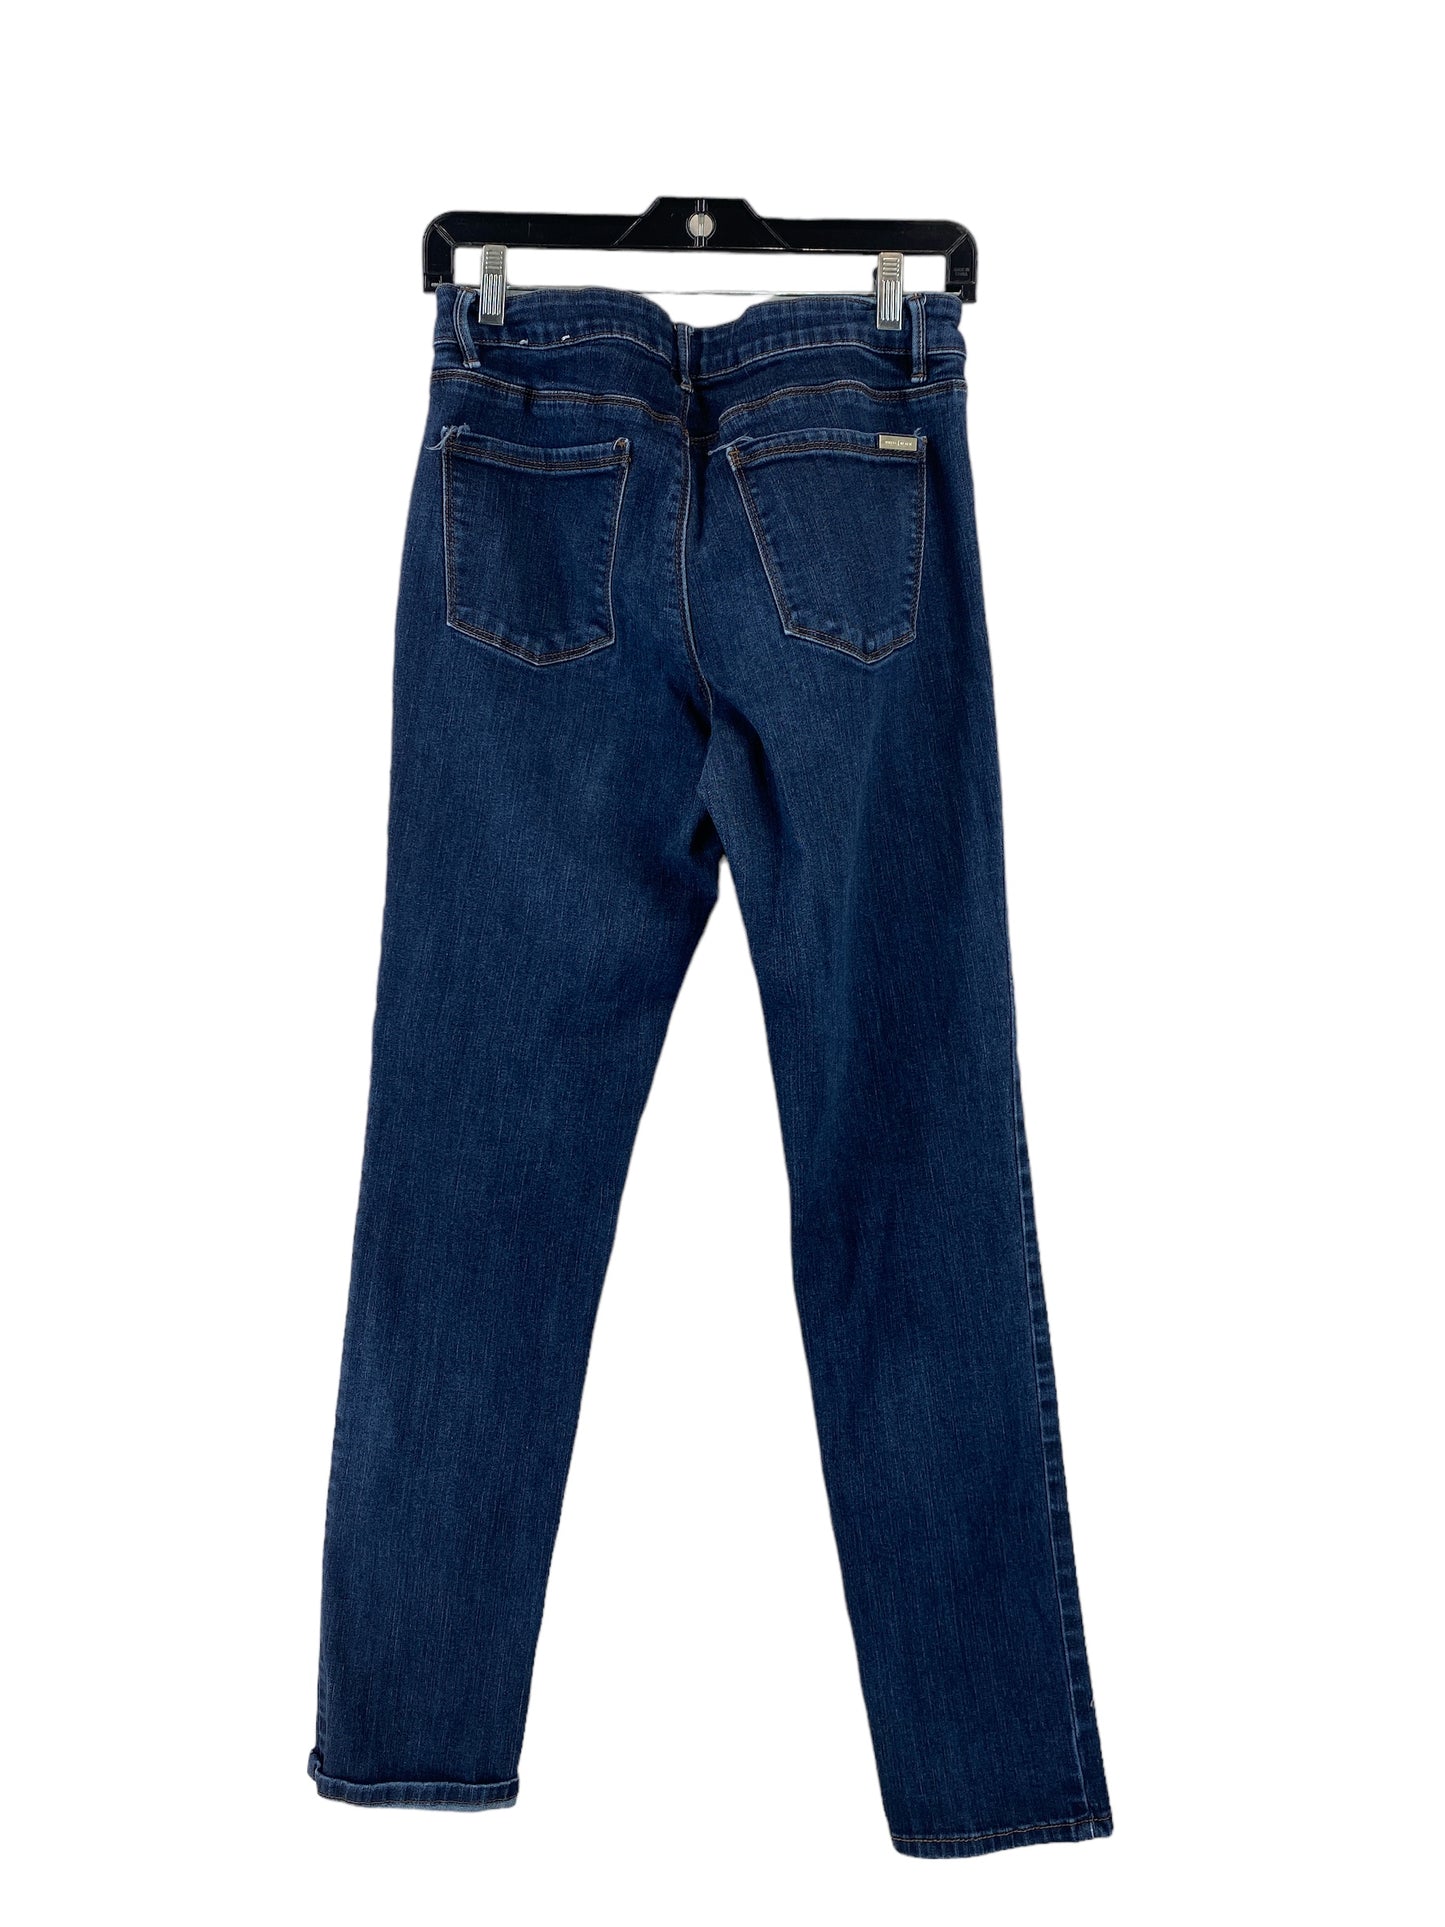 Jeans Skinny By White House Black Market  Size: 8